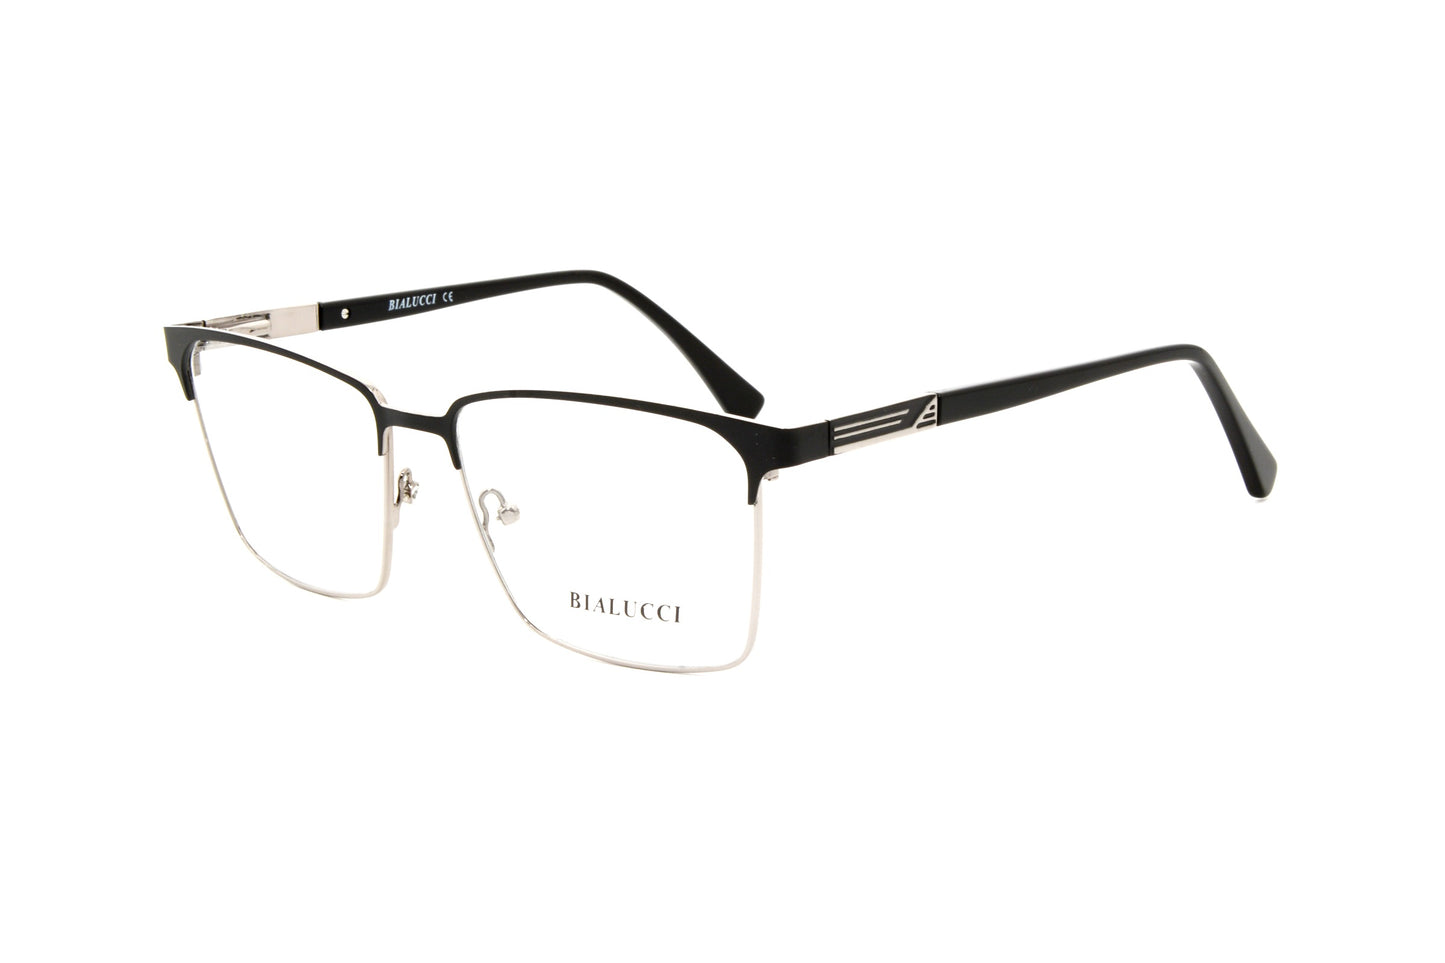 Bialucci eyewear XC 61140 C1